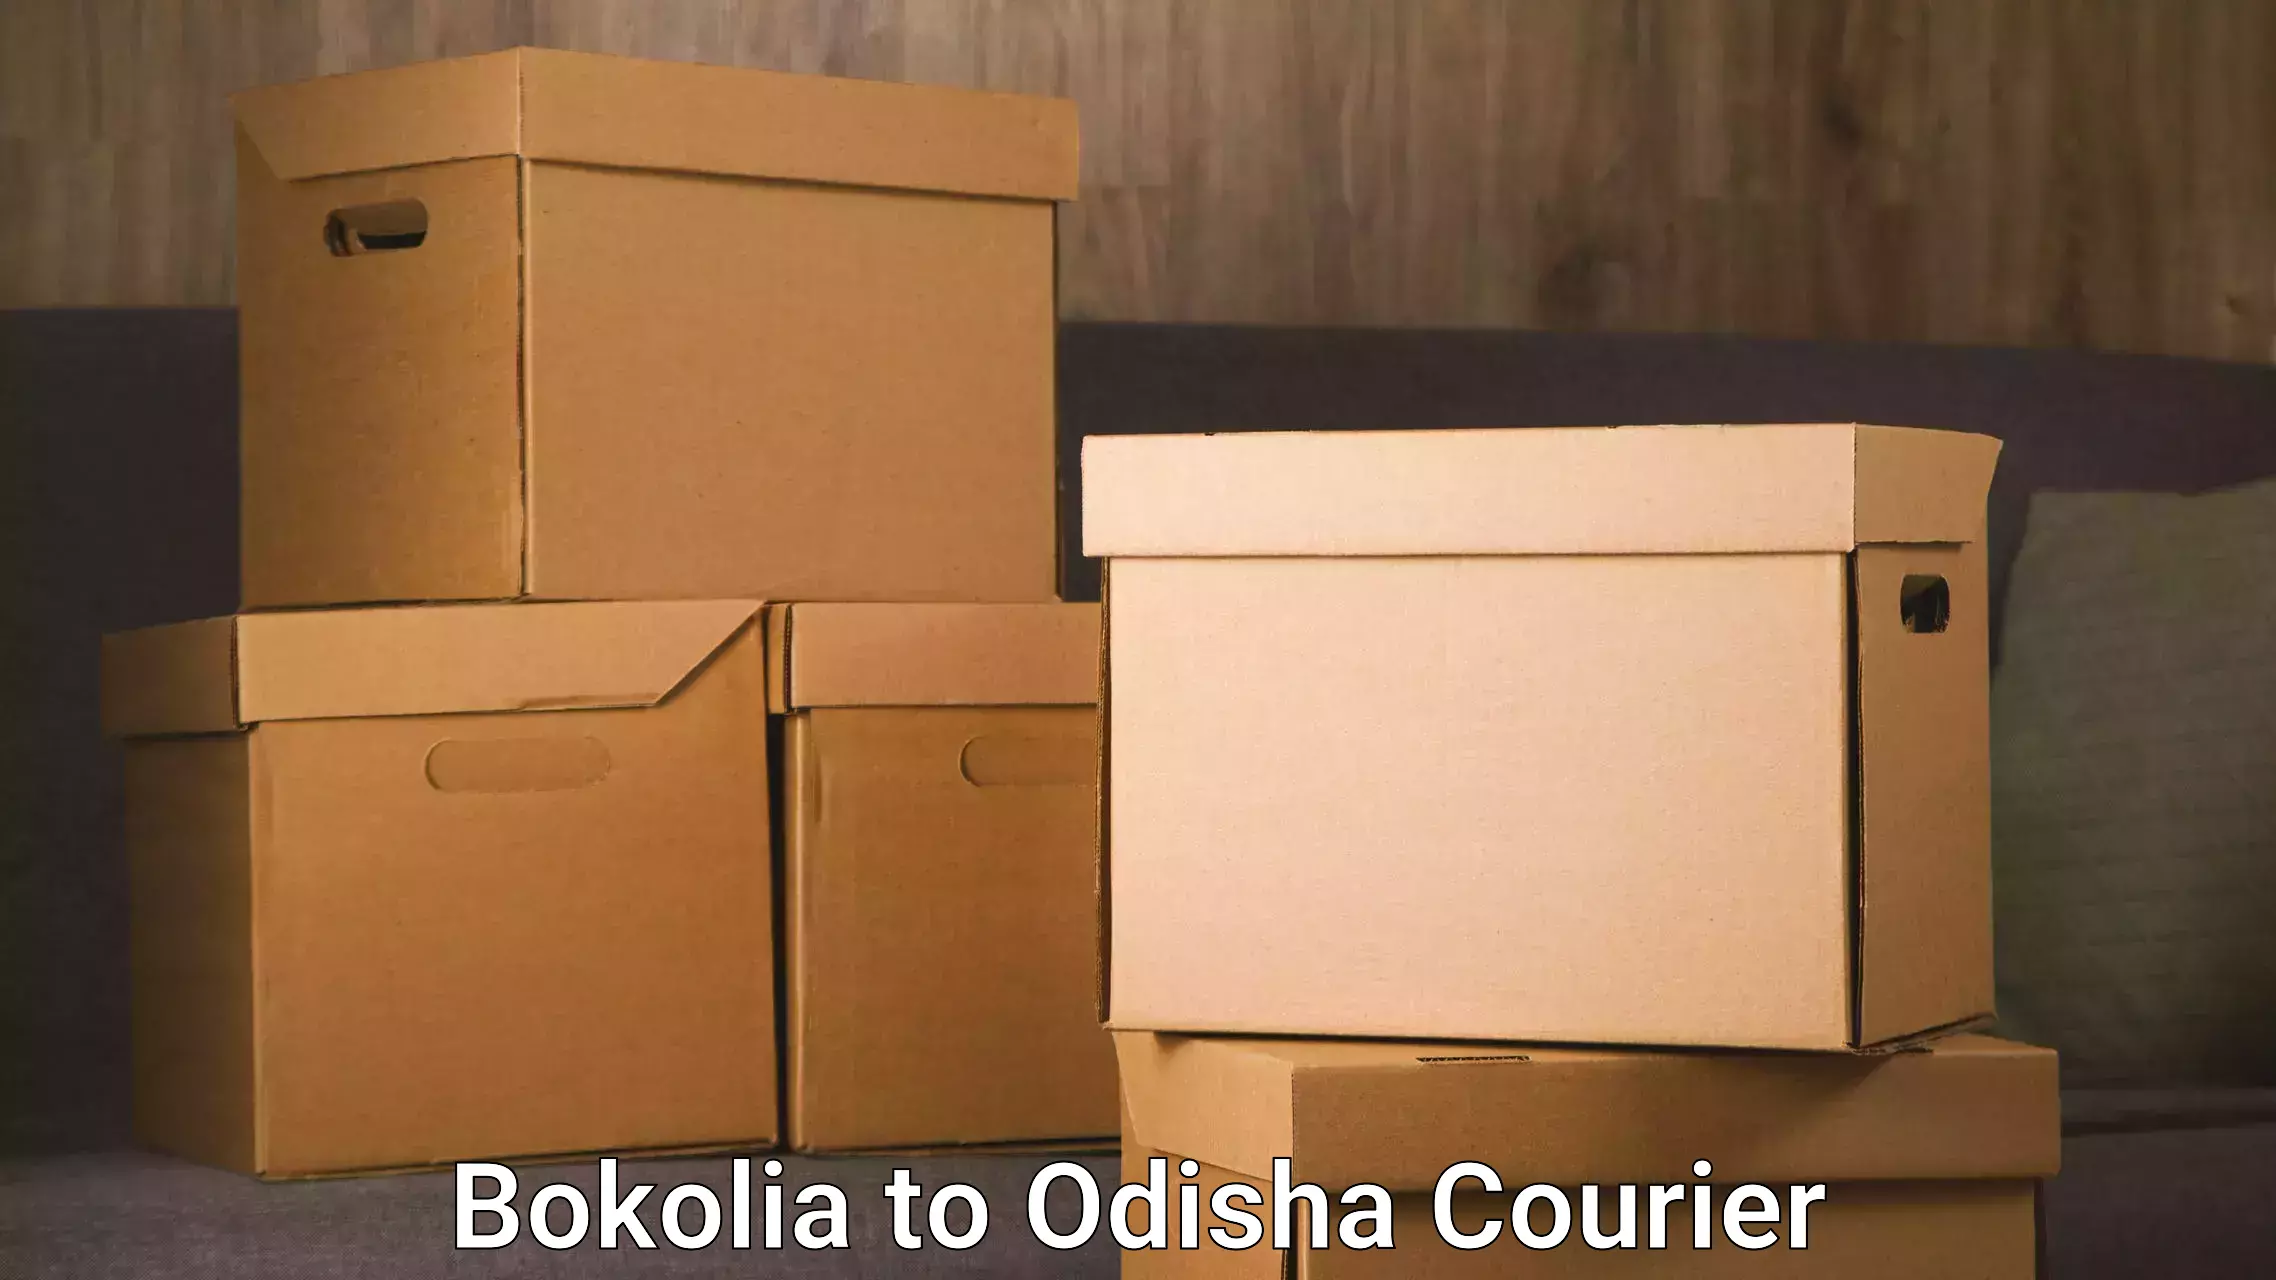 Courier service innovation in Bokolia to Sohela